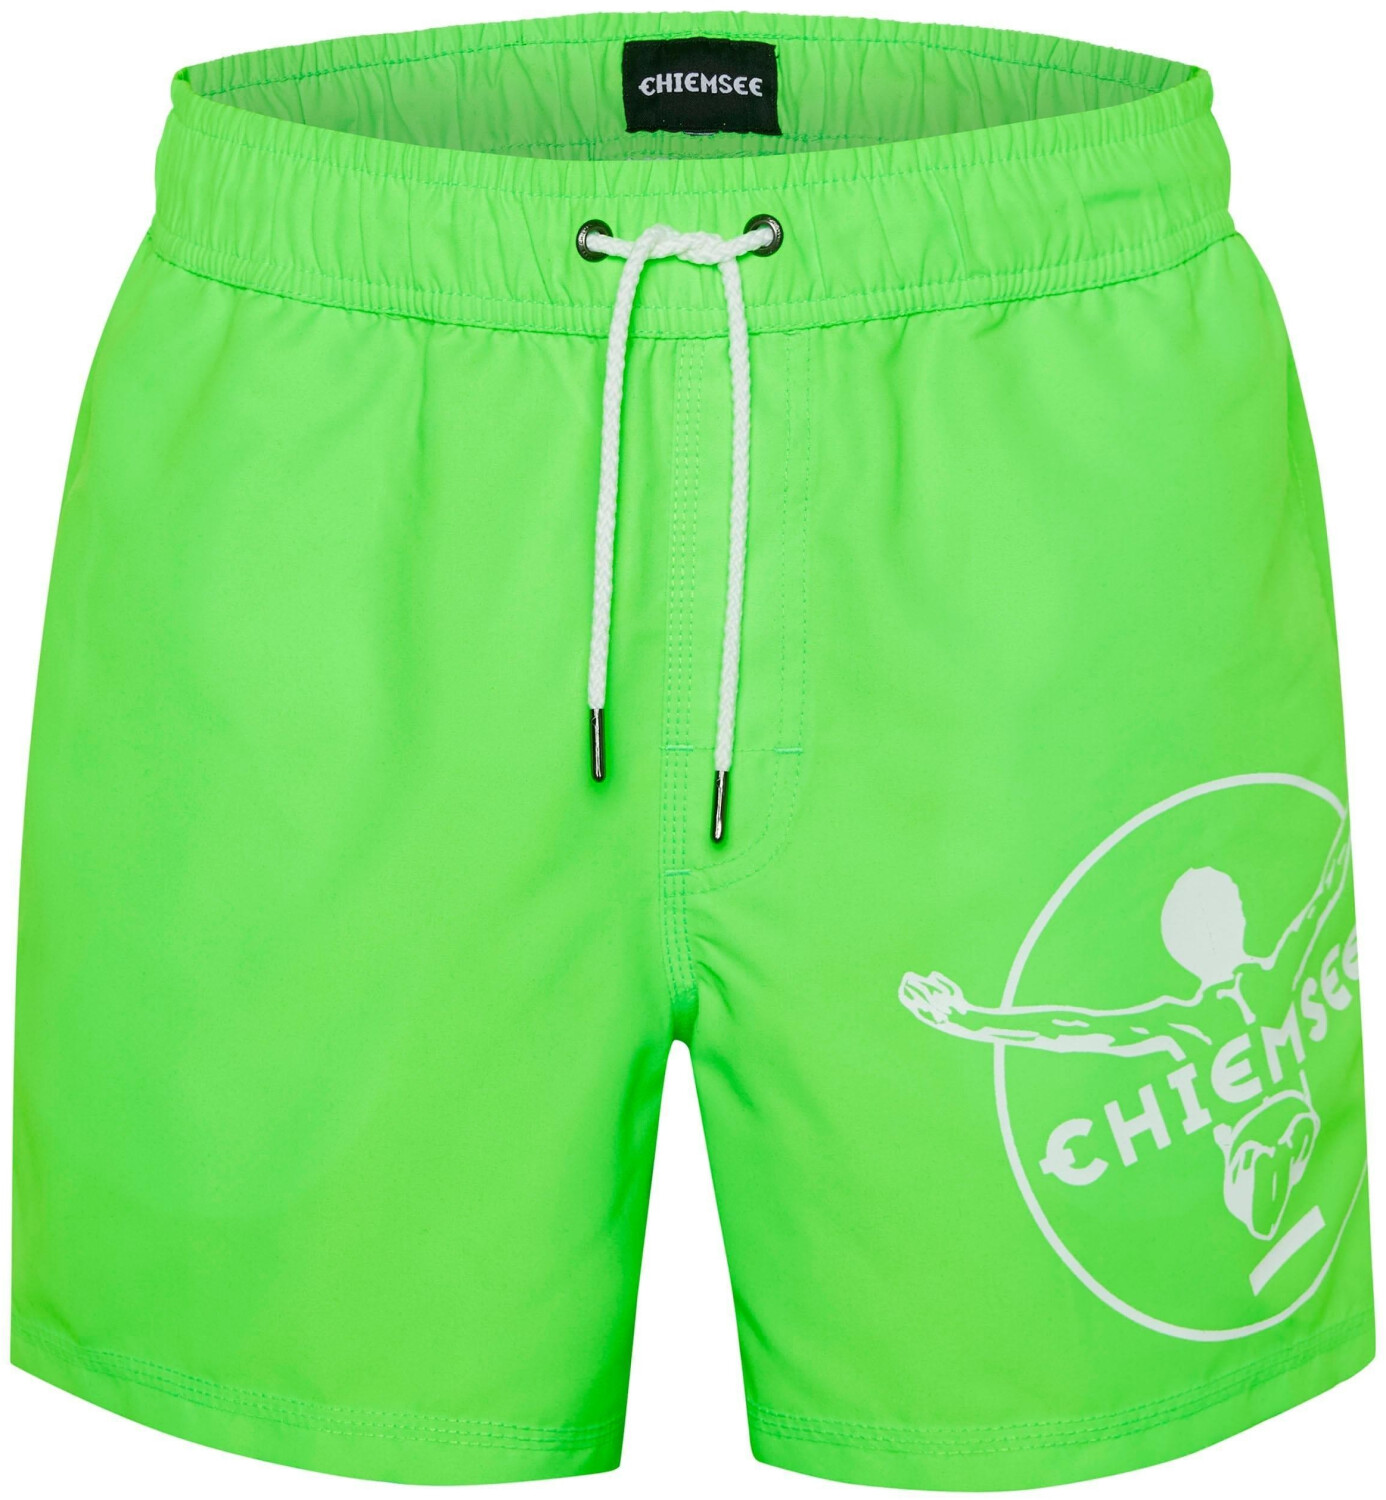 17,10 Shorts | Swim bei Preisvergleich Morro Bay € Chiemsee ab